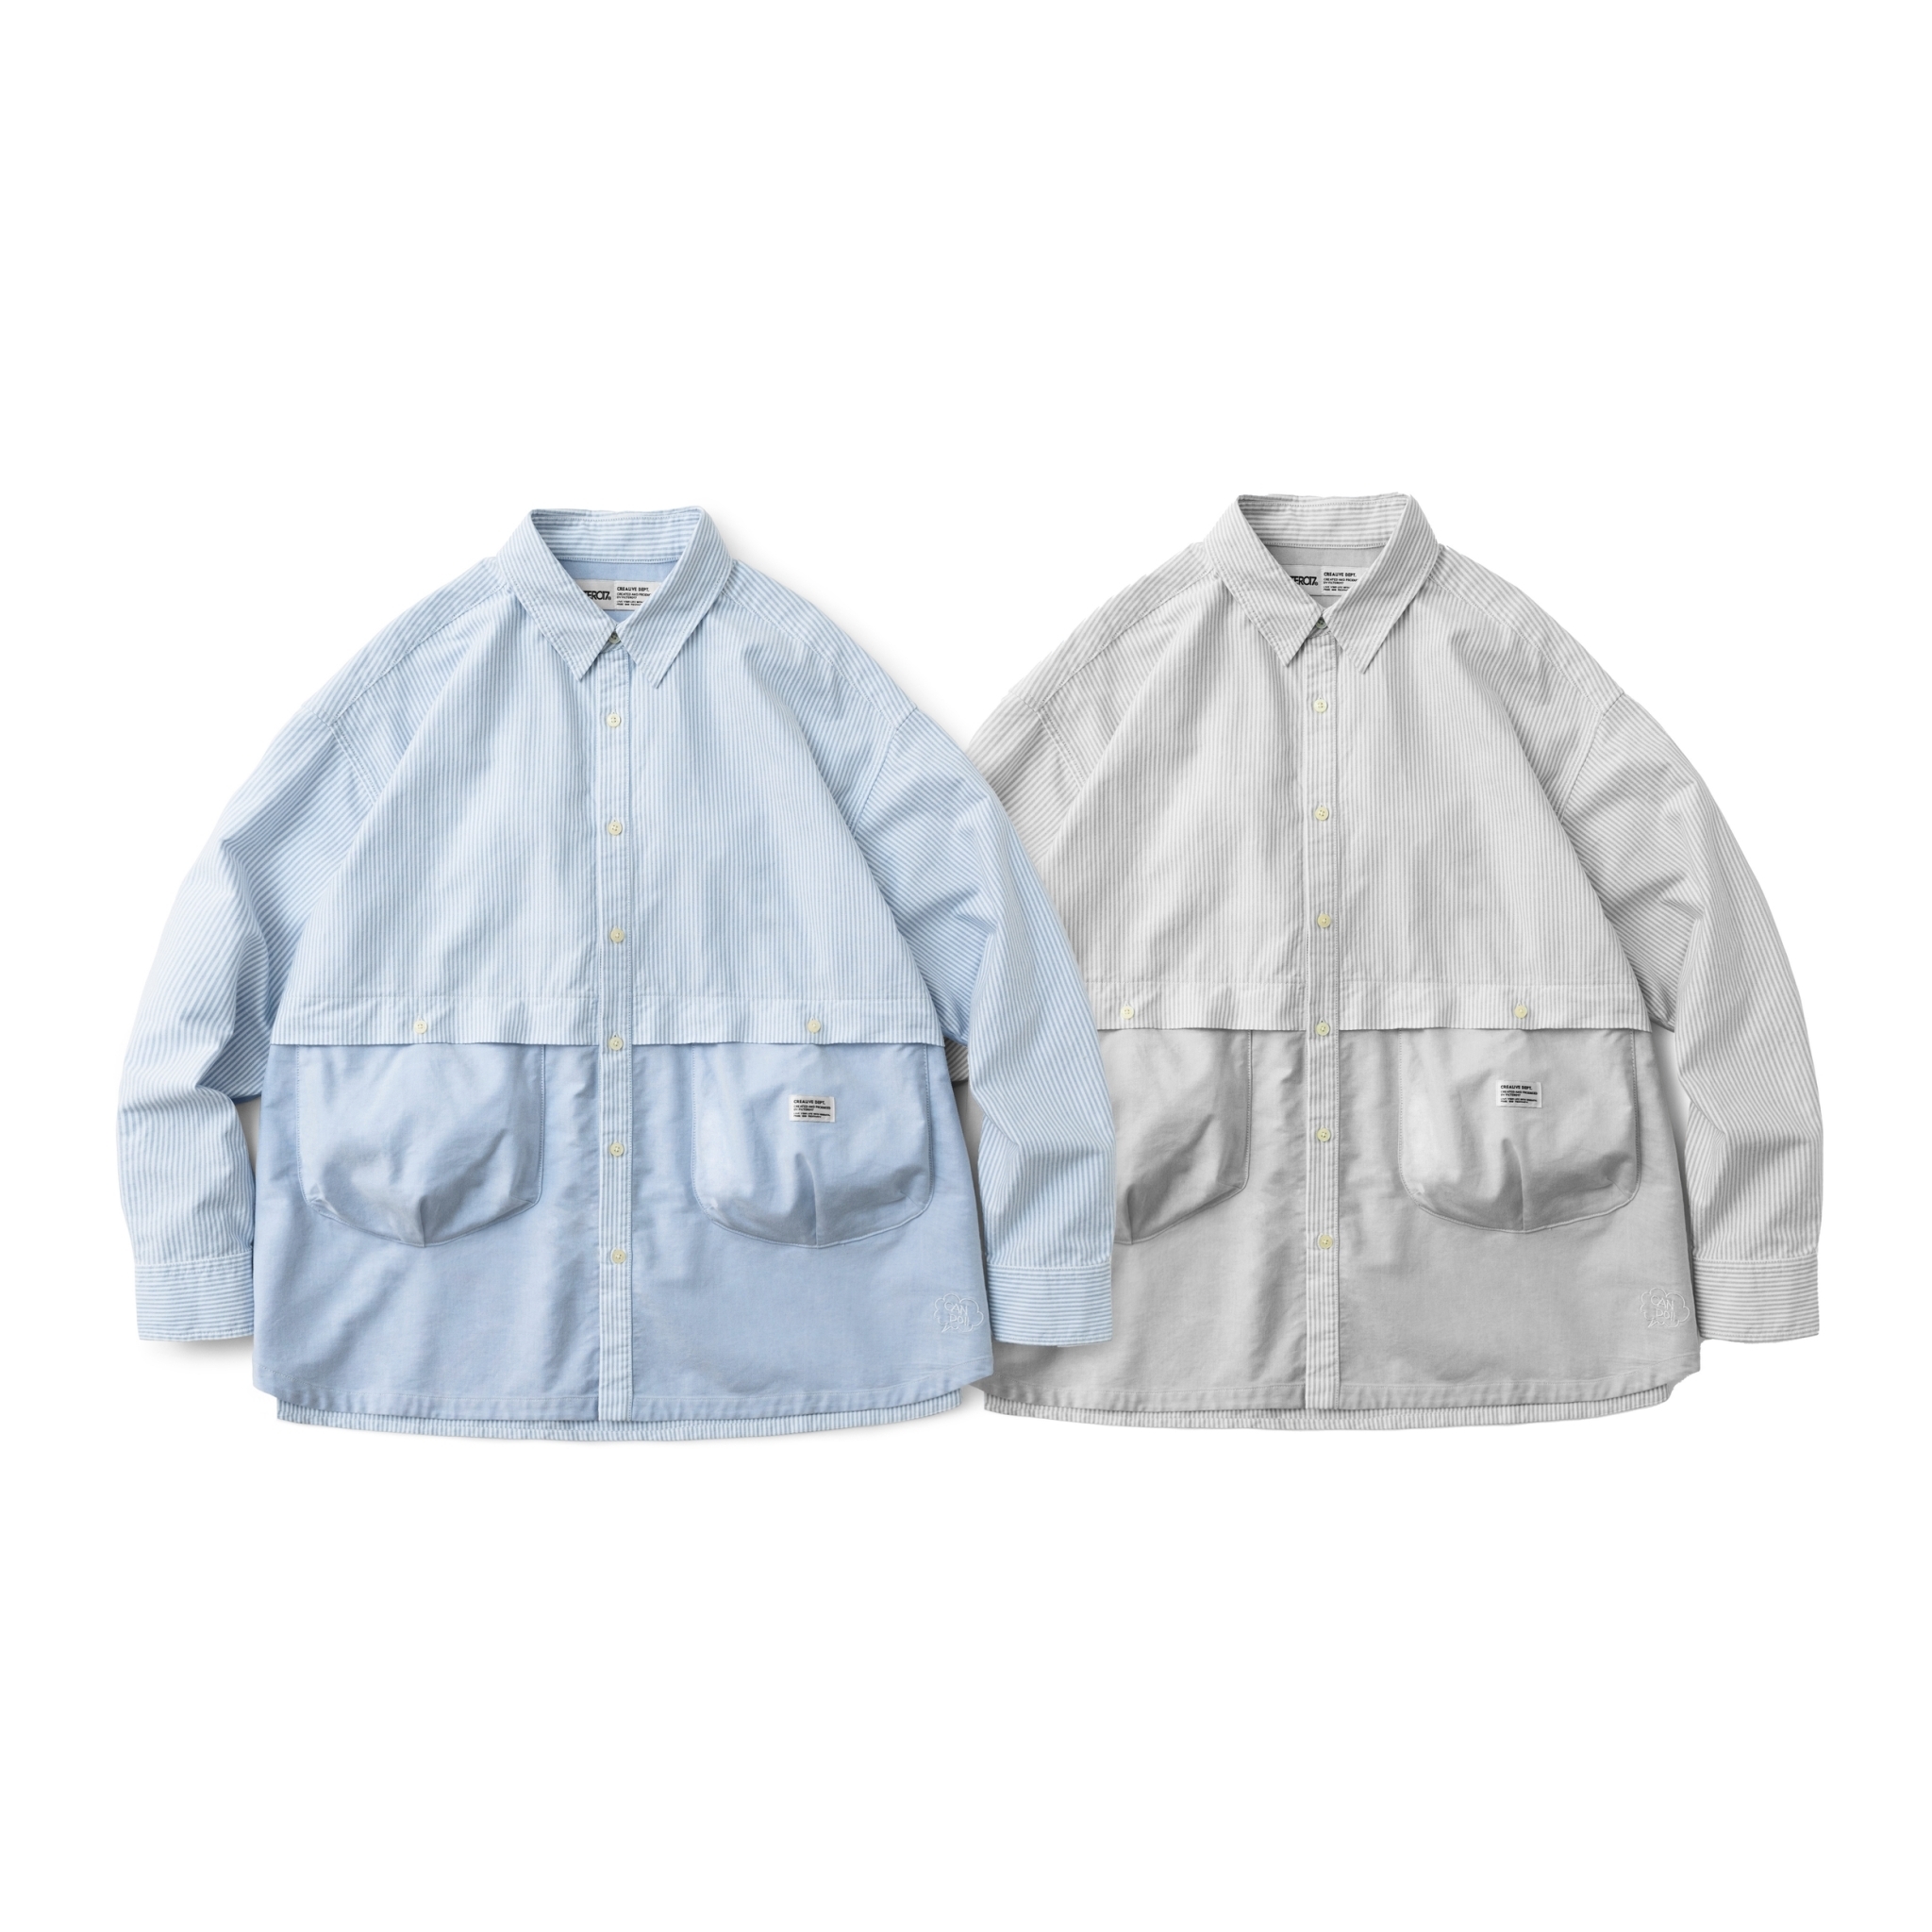 Filter017® Oxford Pocket Spliced shirt 牛津拼接寬版襯衫